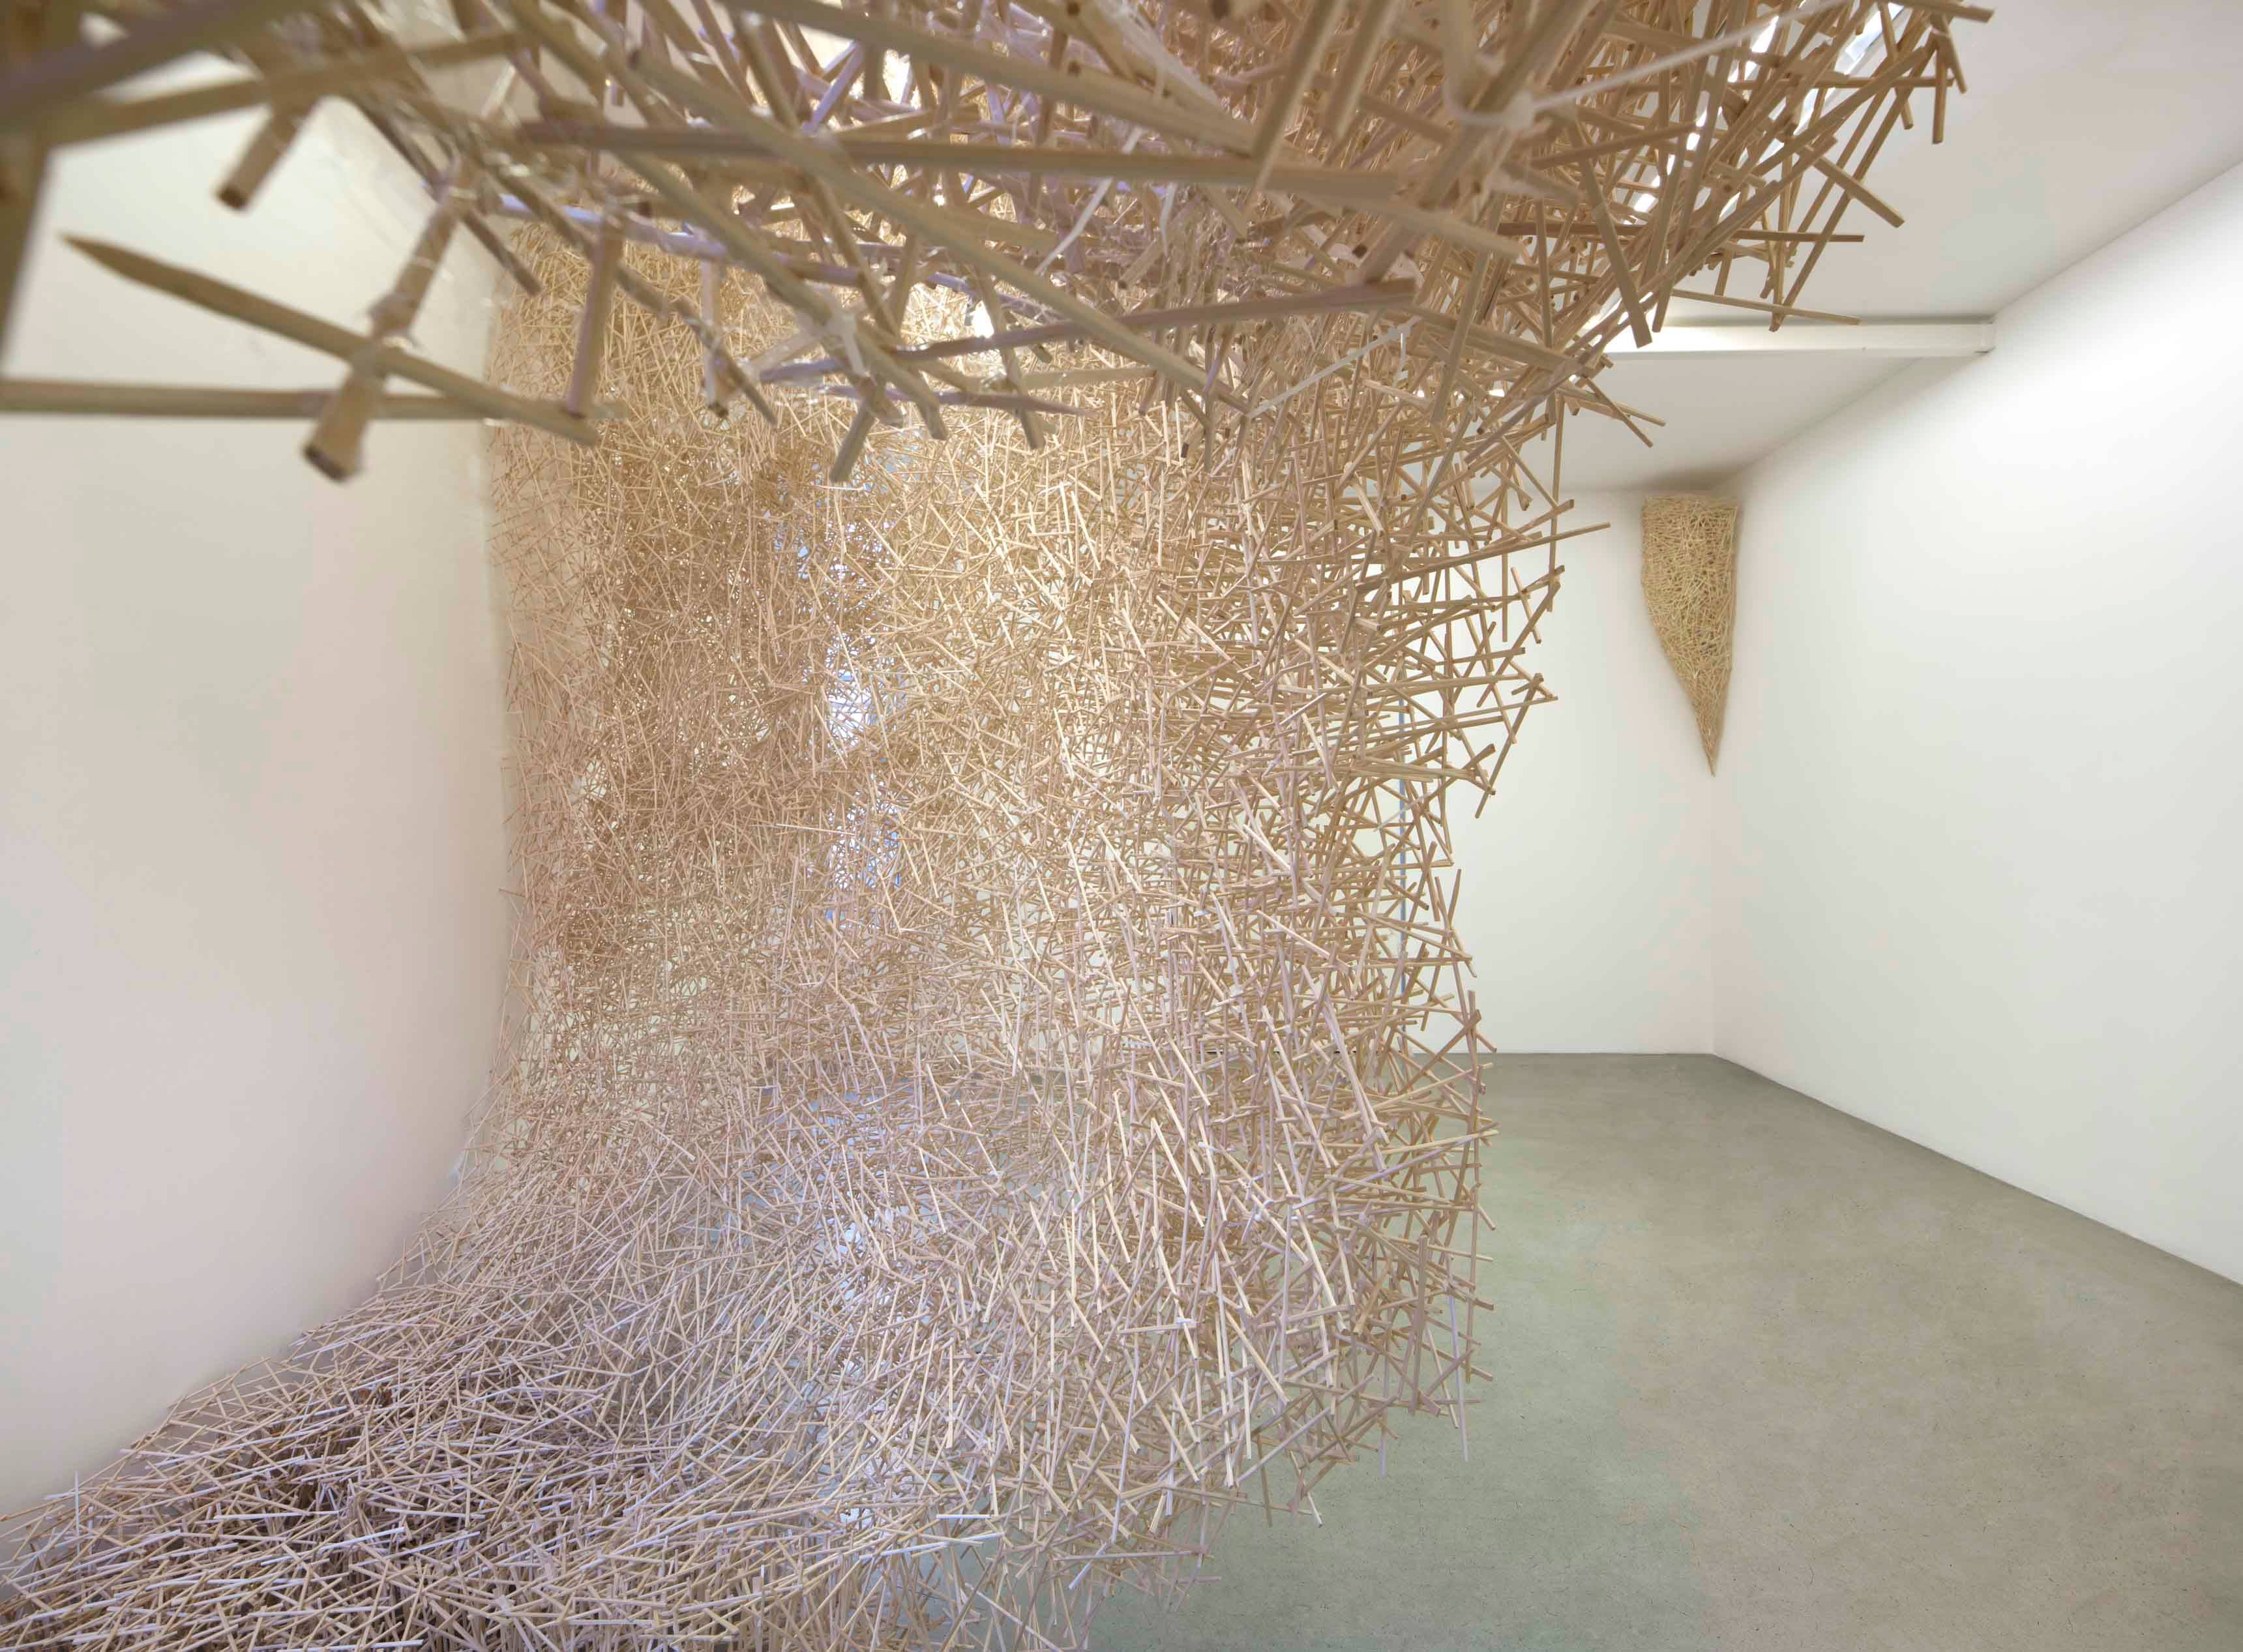   Tadashi Kawamata, Nest, jusqu'au 27 janvier 2018, galerie Kamel Mennour.